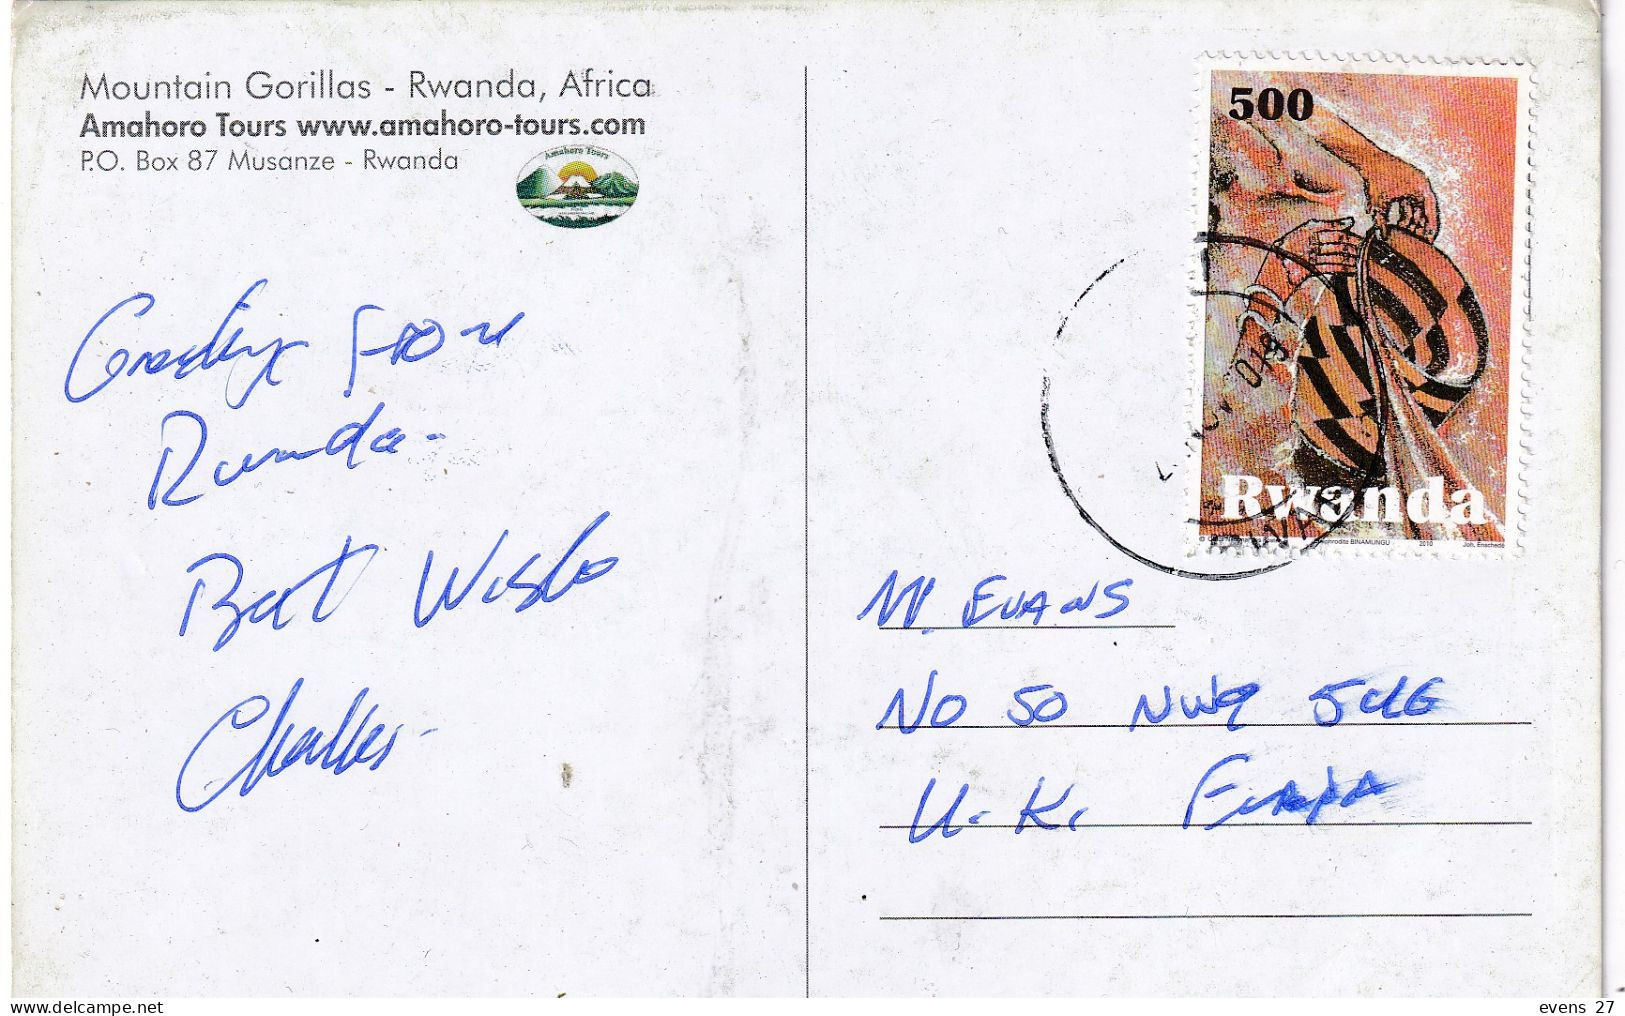 RWANDA-MOUNTAIN GORILLA-USED POSTCARD --RWANDA POSTMARK- - Rwanda